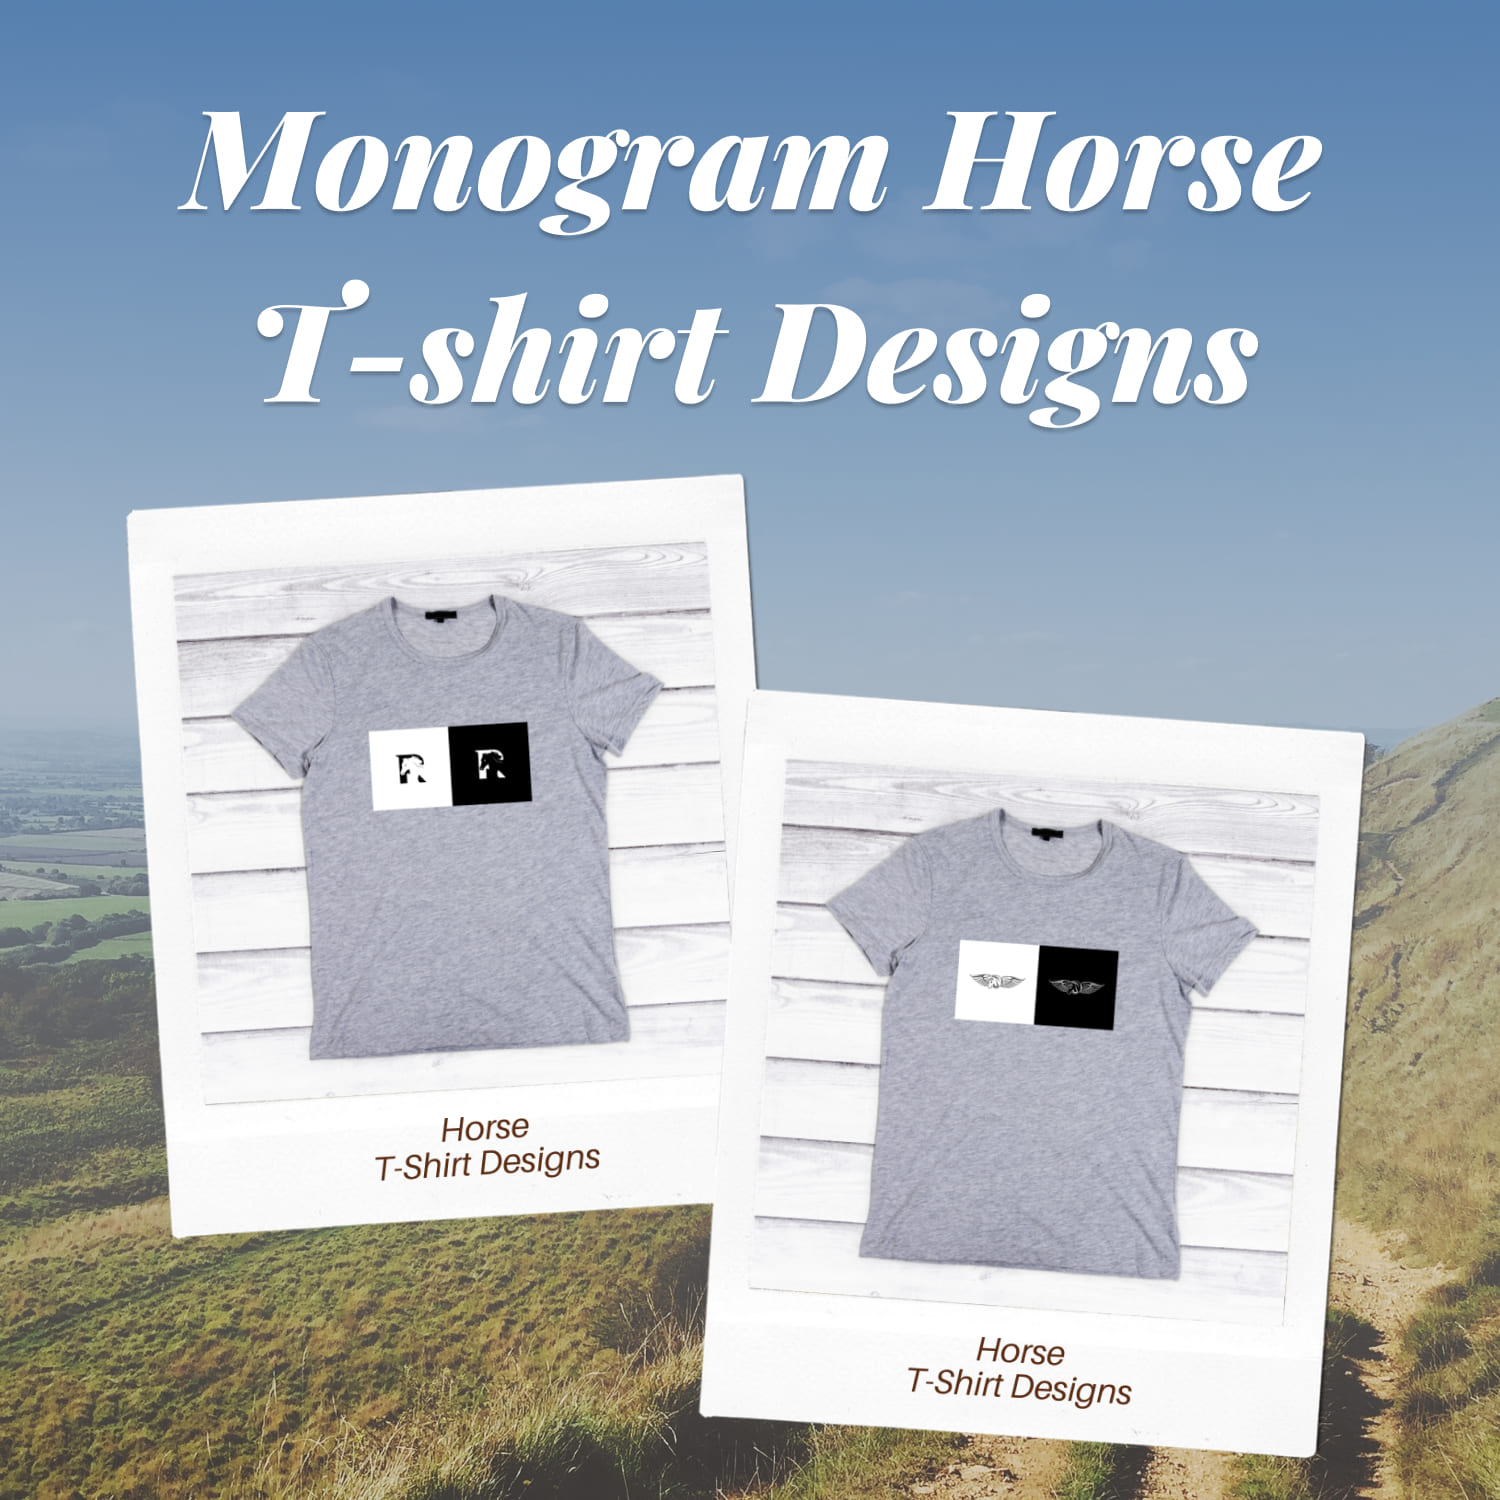 Monogram Horse Svg T-shirt Designs.